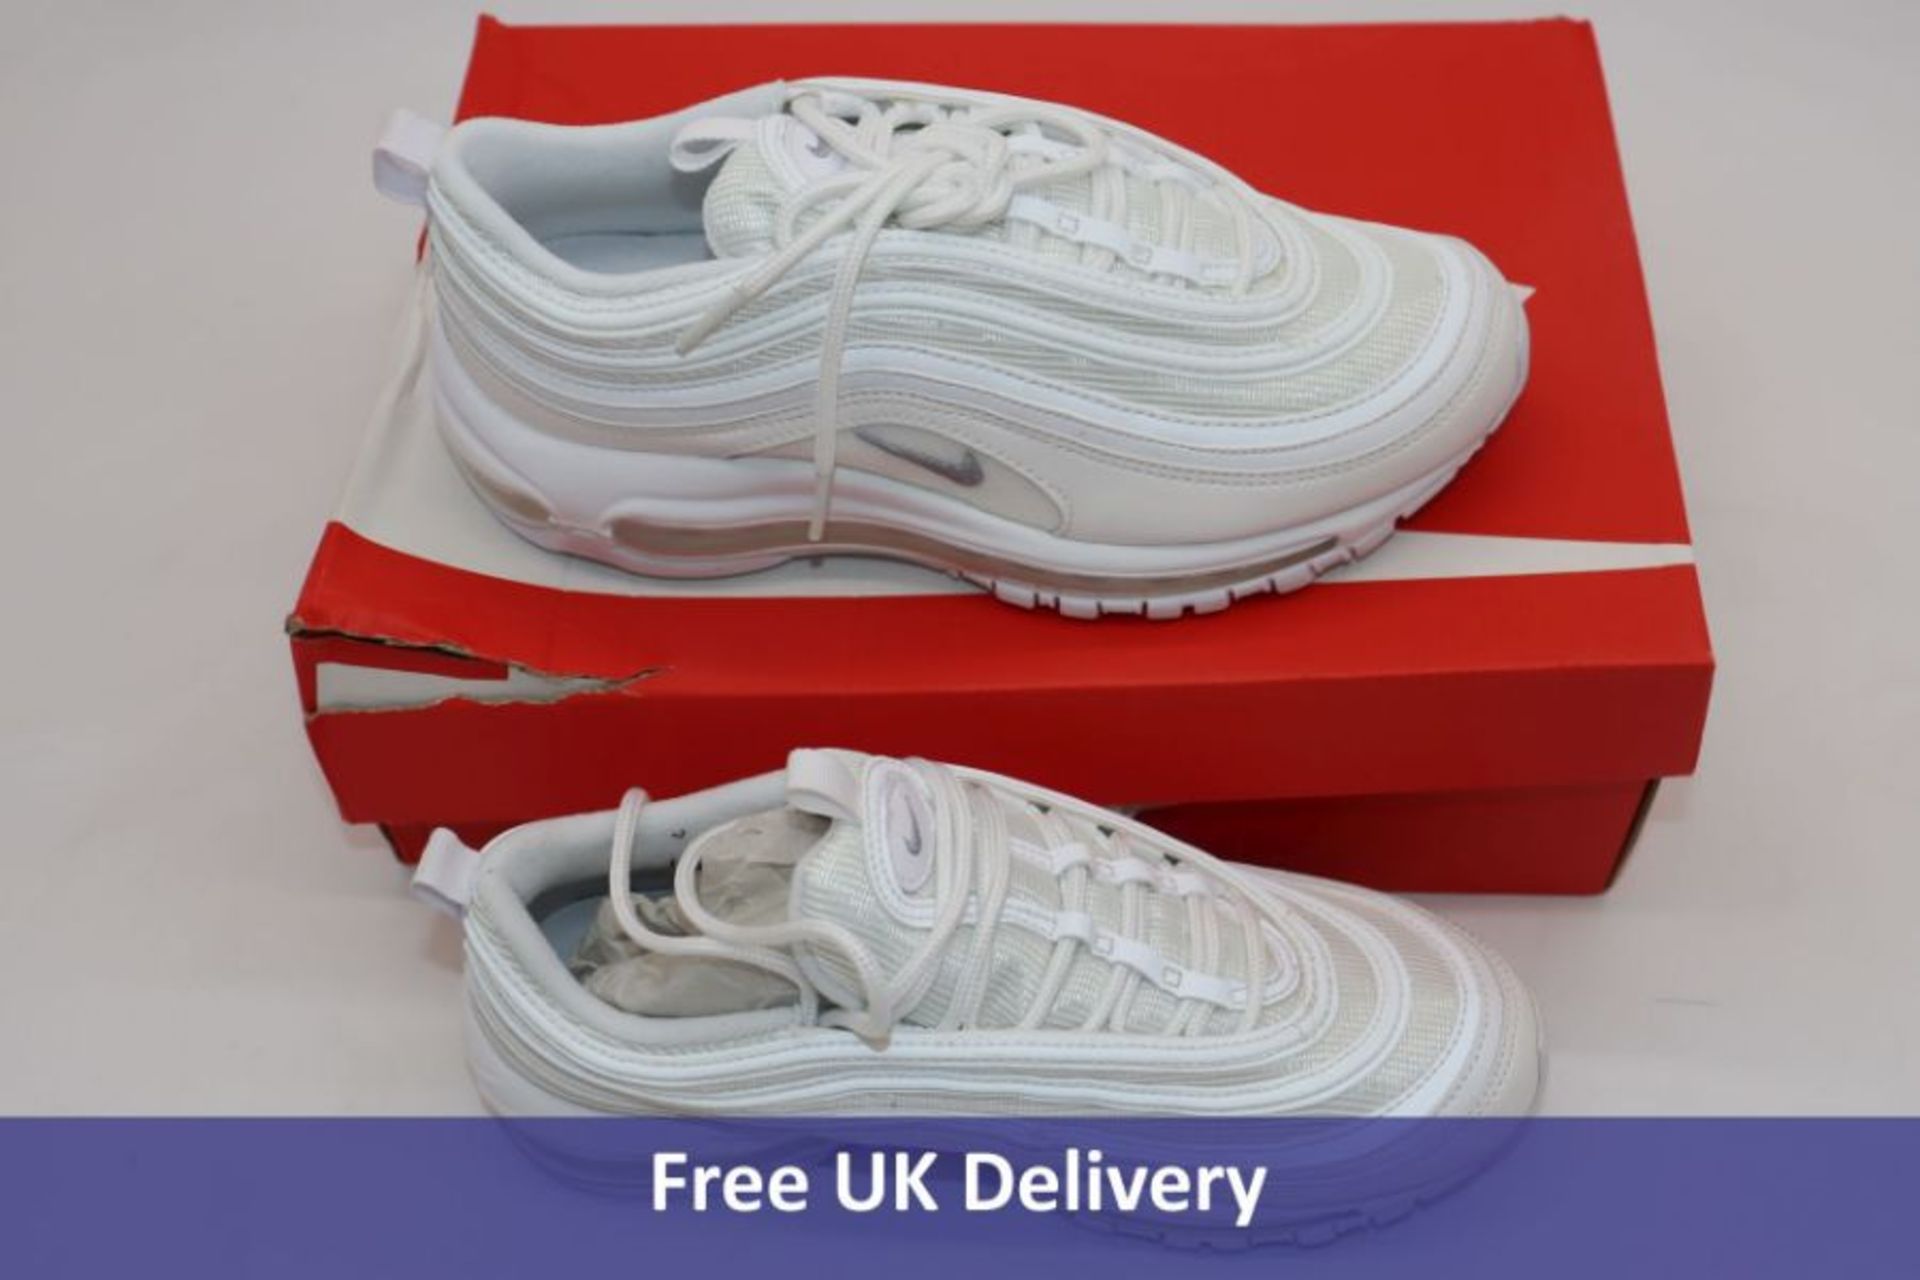 Nike Air Max 97 Trainers, White, UK 5.5